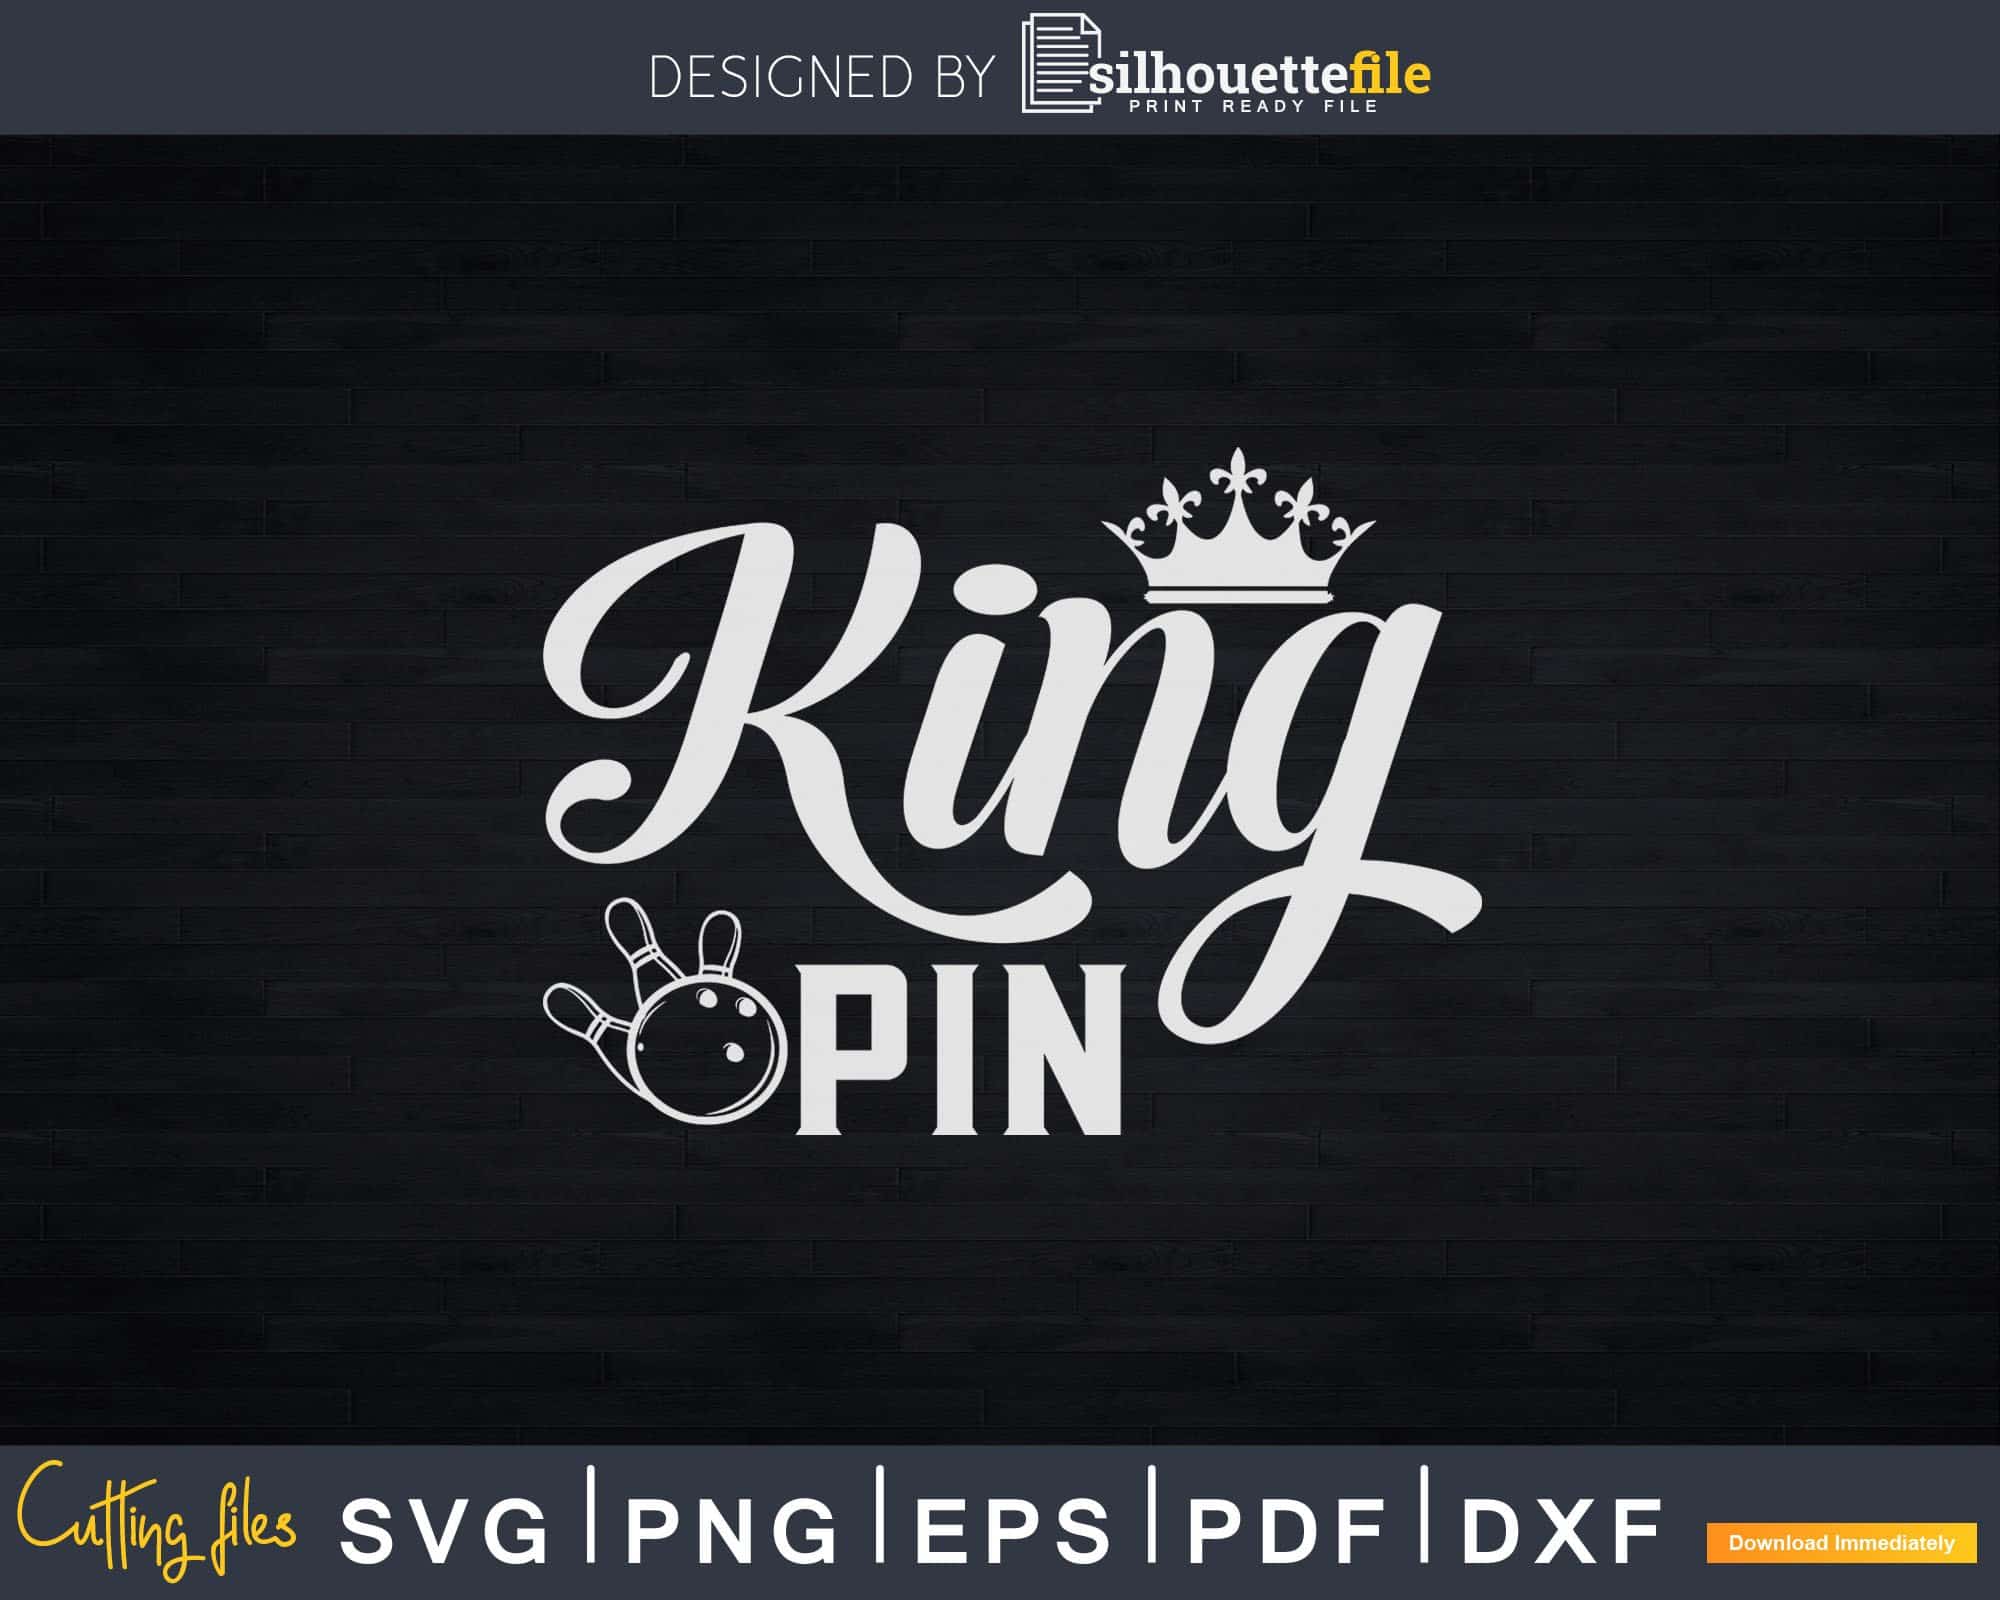 Pin on SVG Cut Files